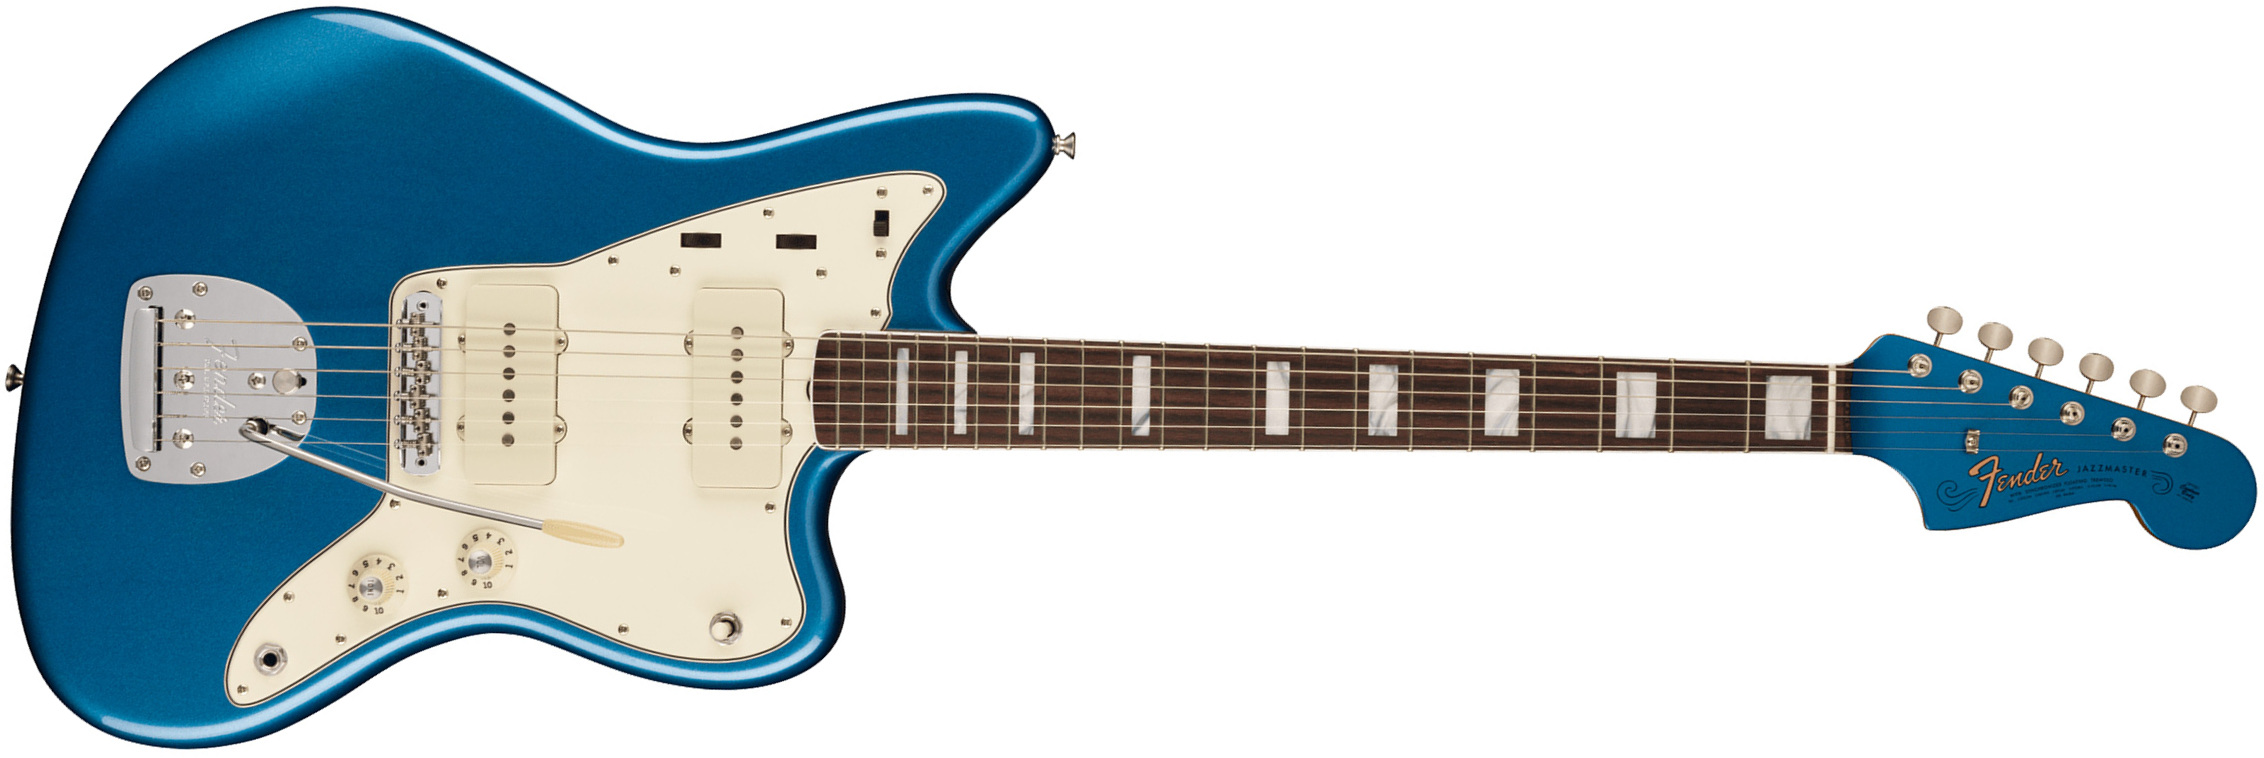 Fender Jazzmaster 1966 American Vintage Ii Usa Sh Trem Rw - Lake Placid Blue - Retro-rock elektrische gitaar - Main picture